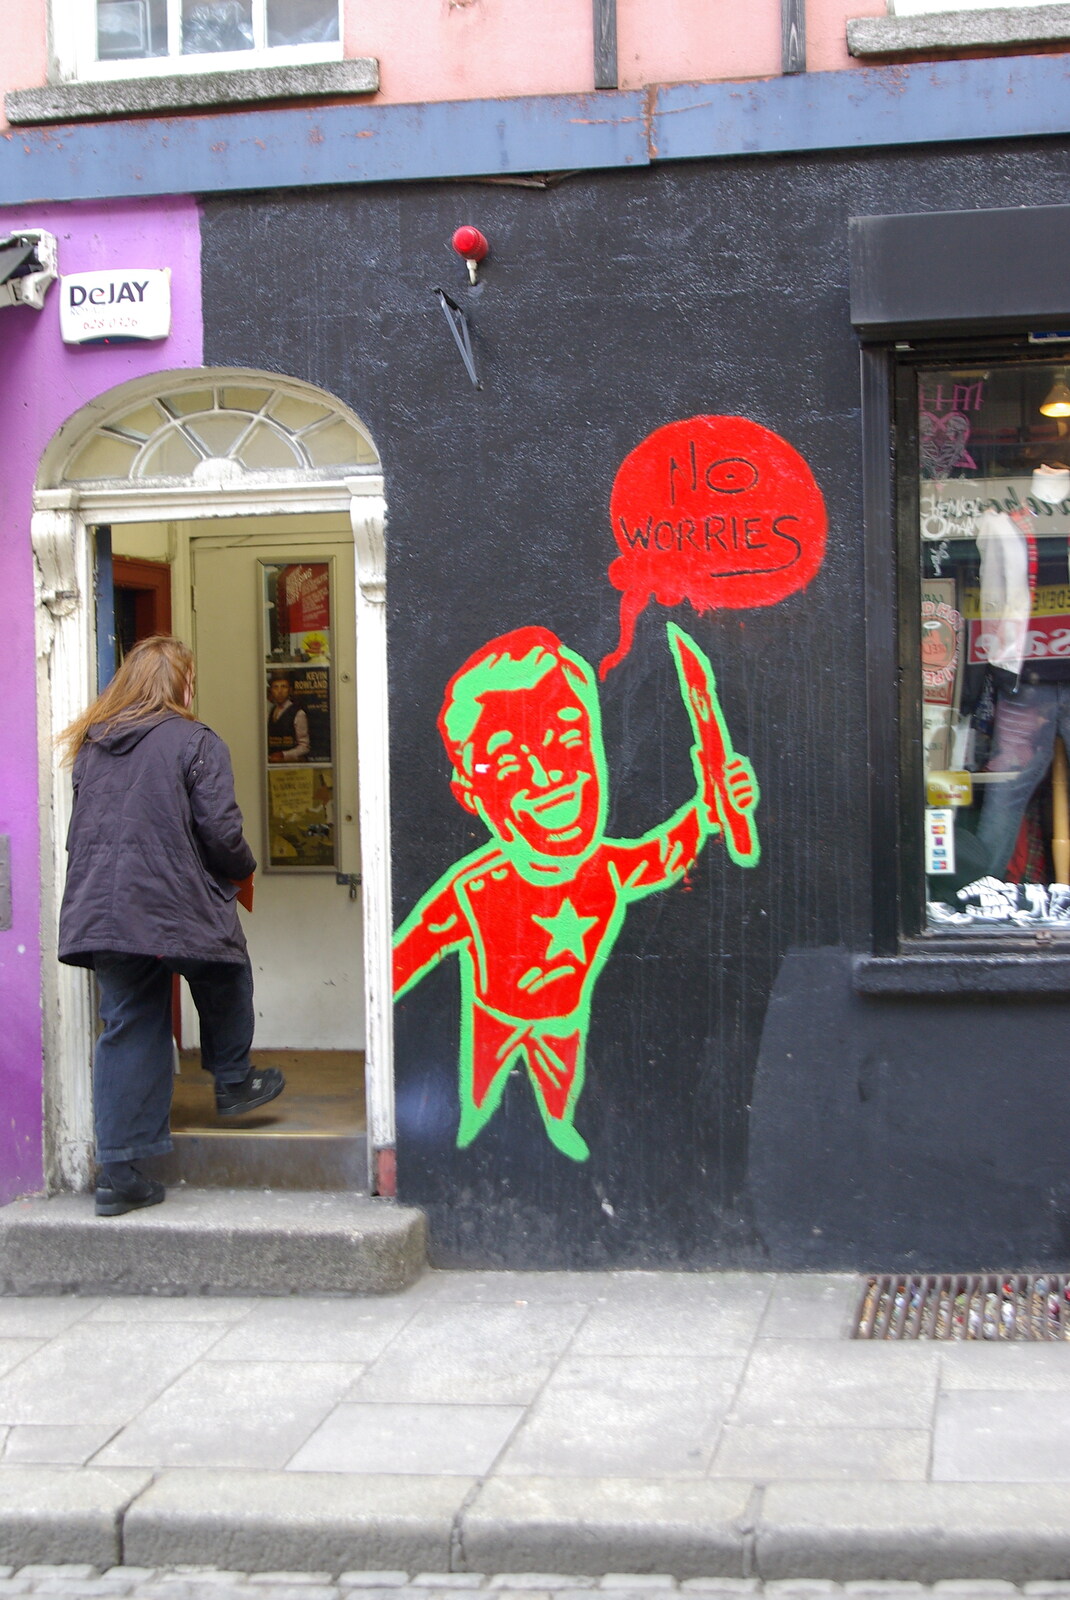 Easter in Dublin, Ireland - 21st March 2008: Super-bright graffiti